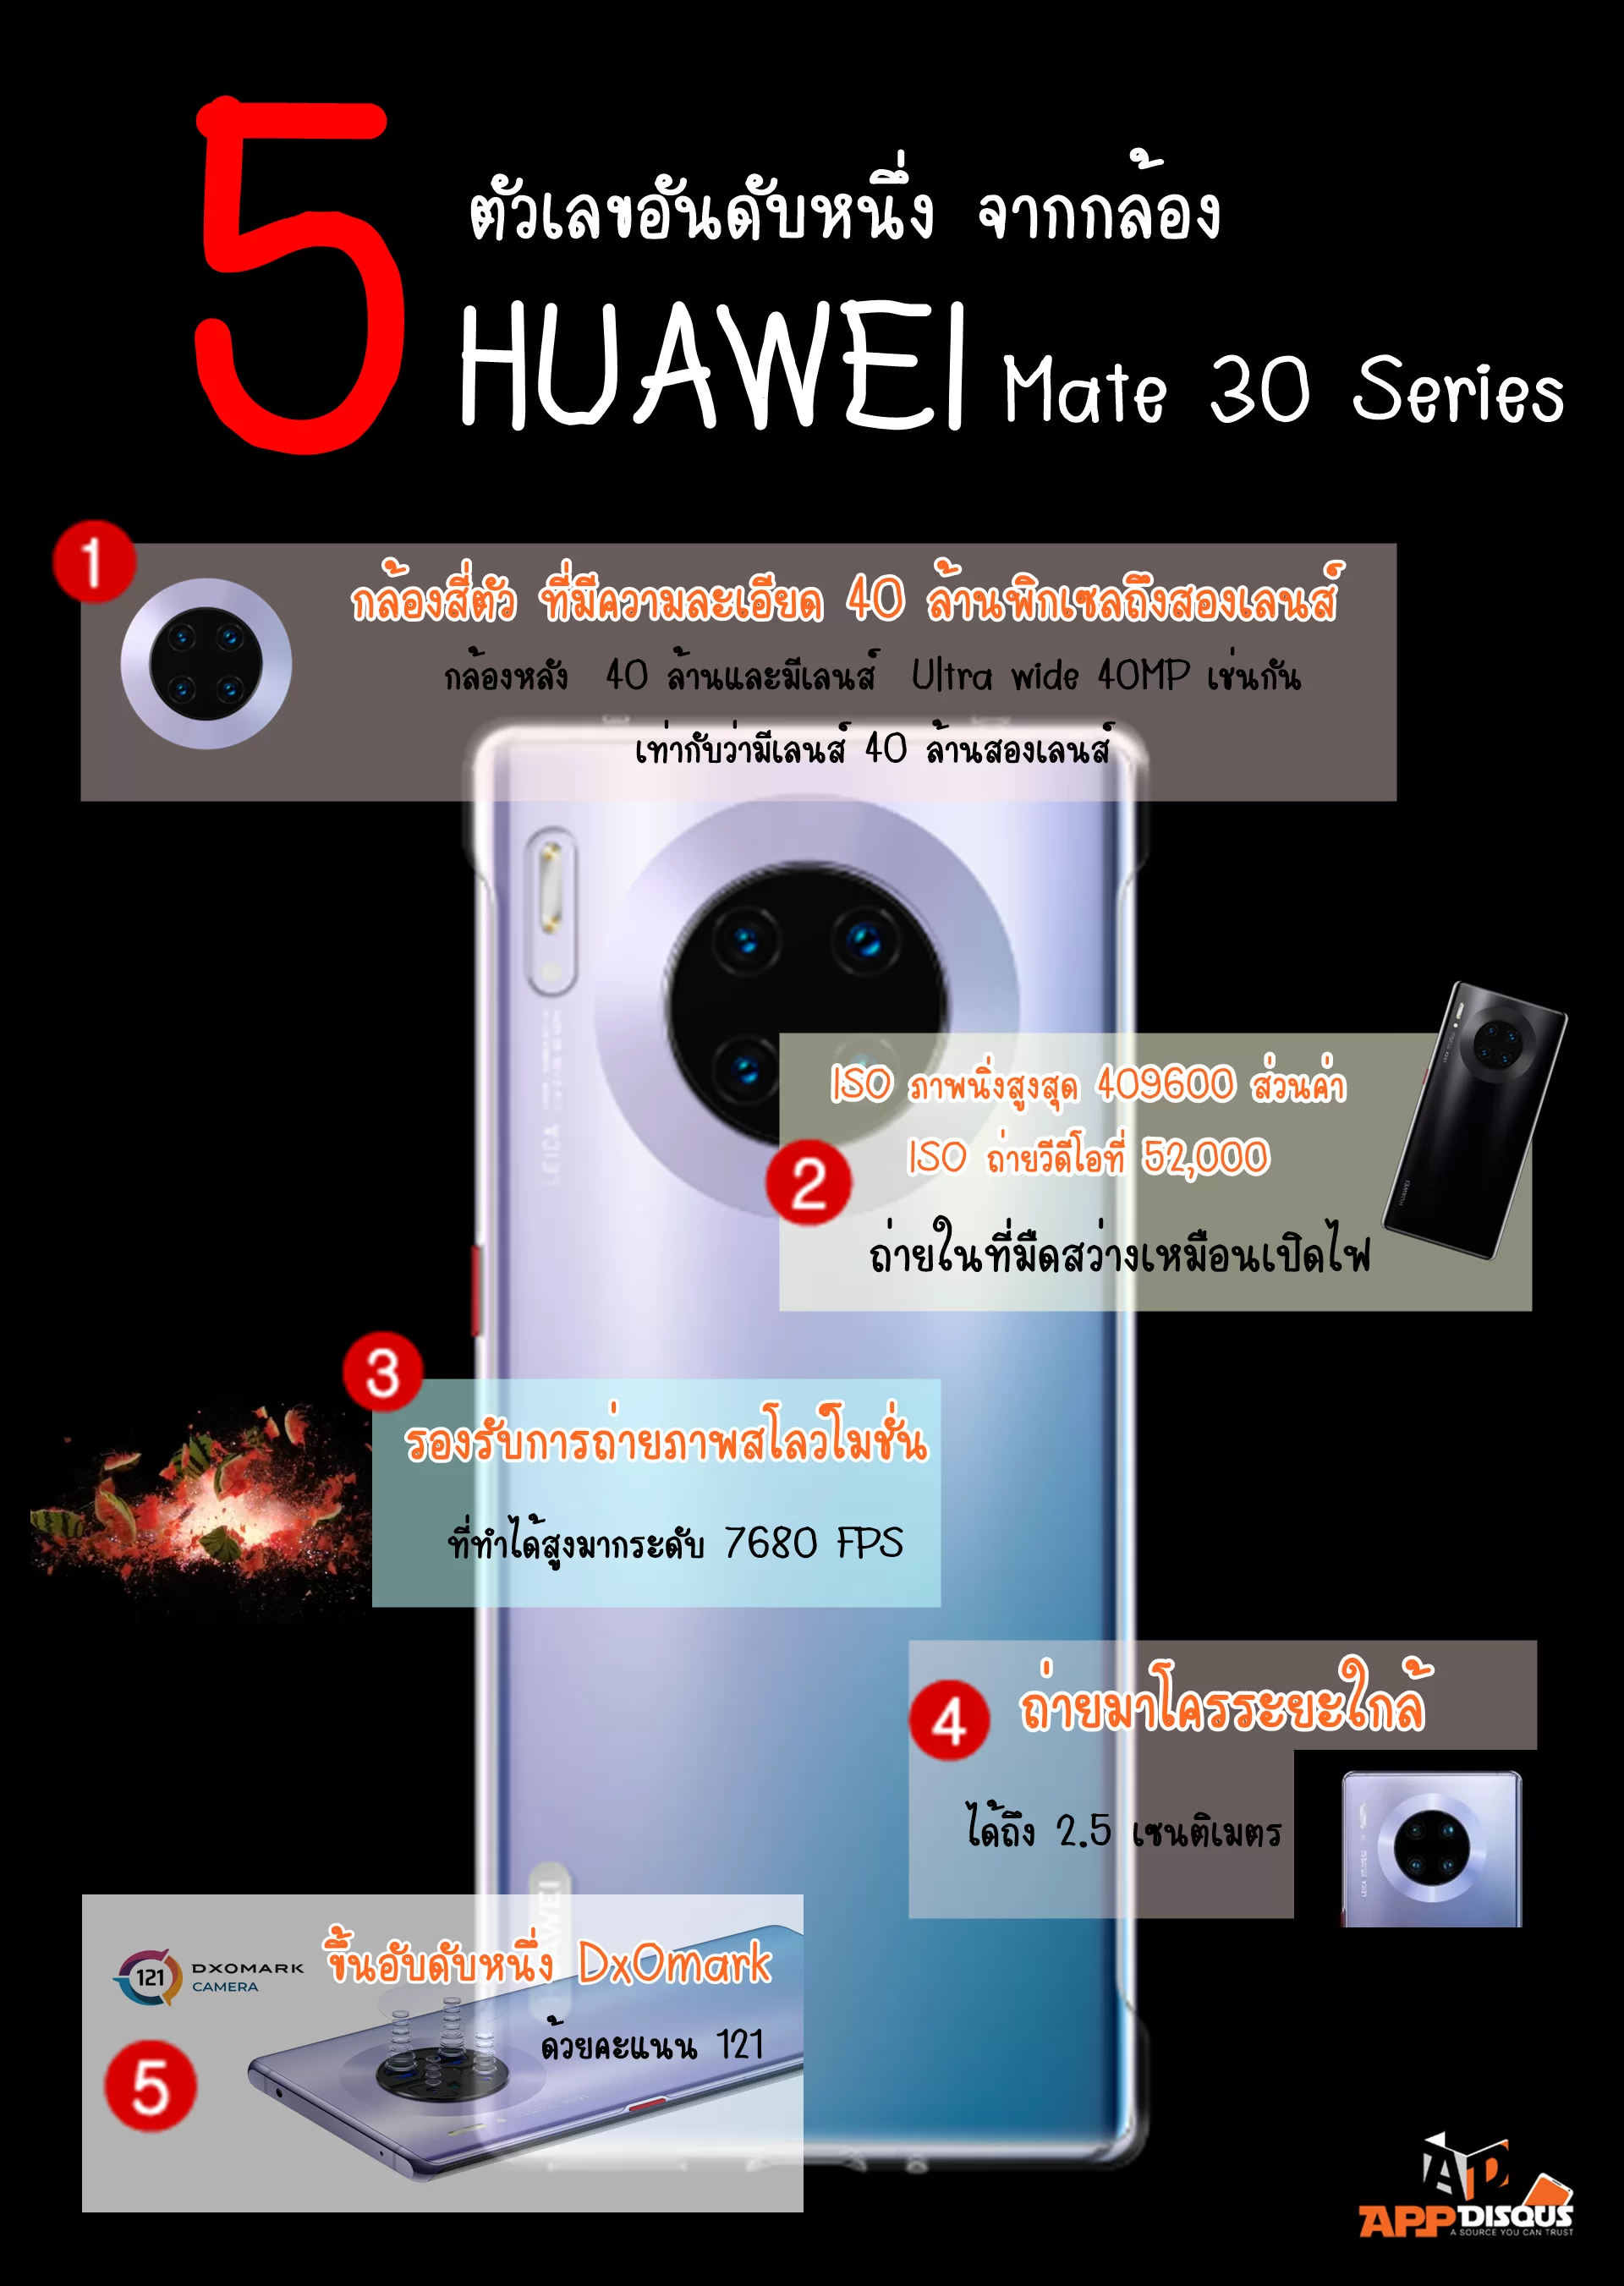 Untitled 1 | Huawei | 5 ตัวเลข อันดับ 1 จากกล้อง Huawei Mate 30 Series